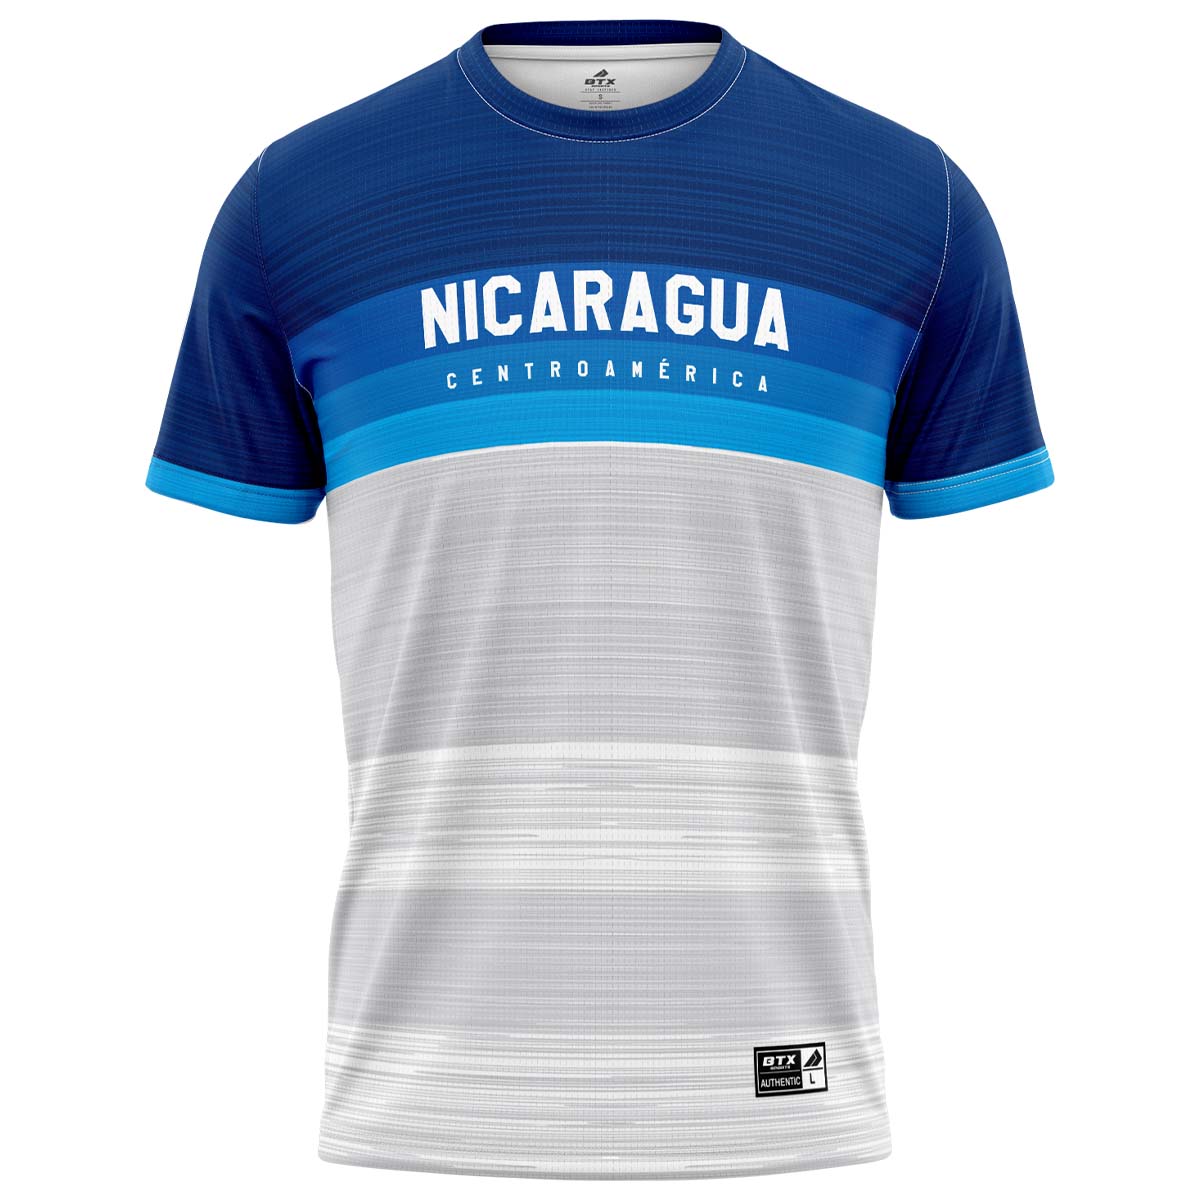 Camiseta NIcaragua Centroamérica azul